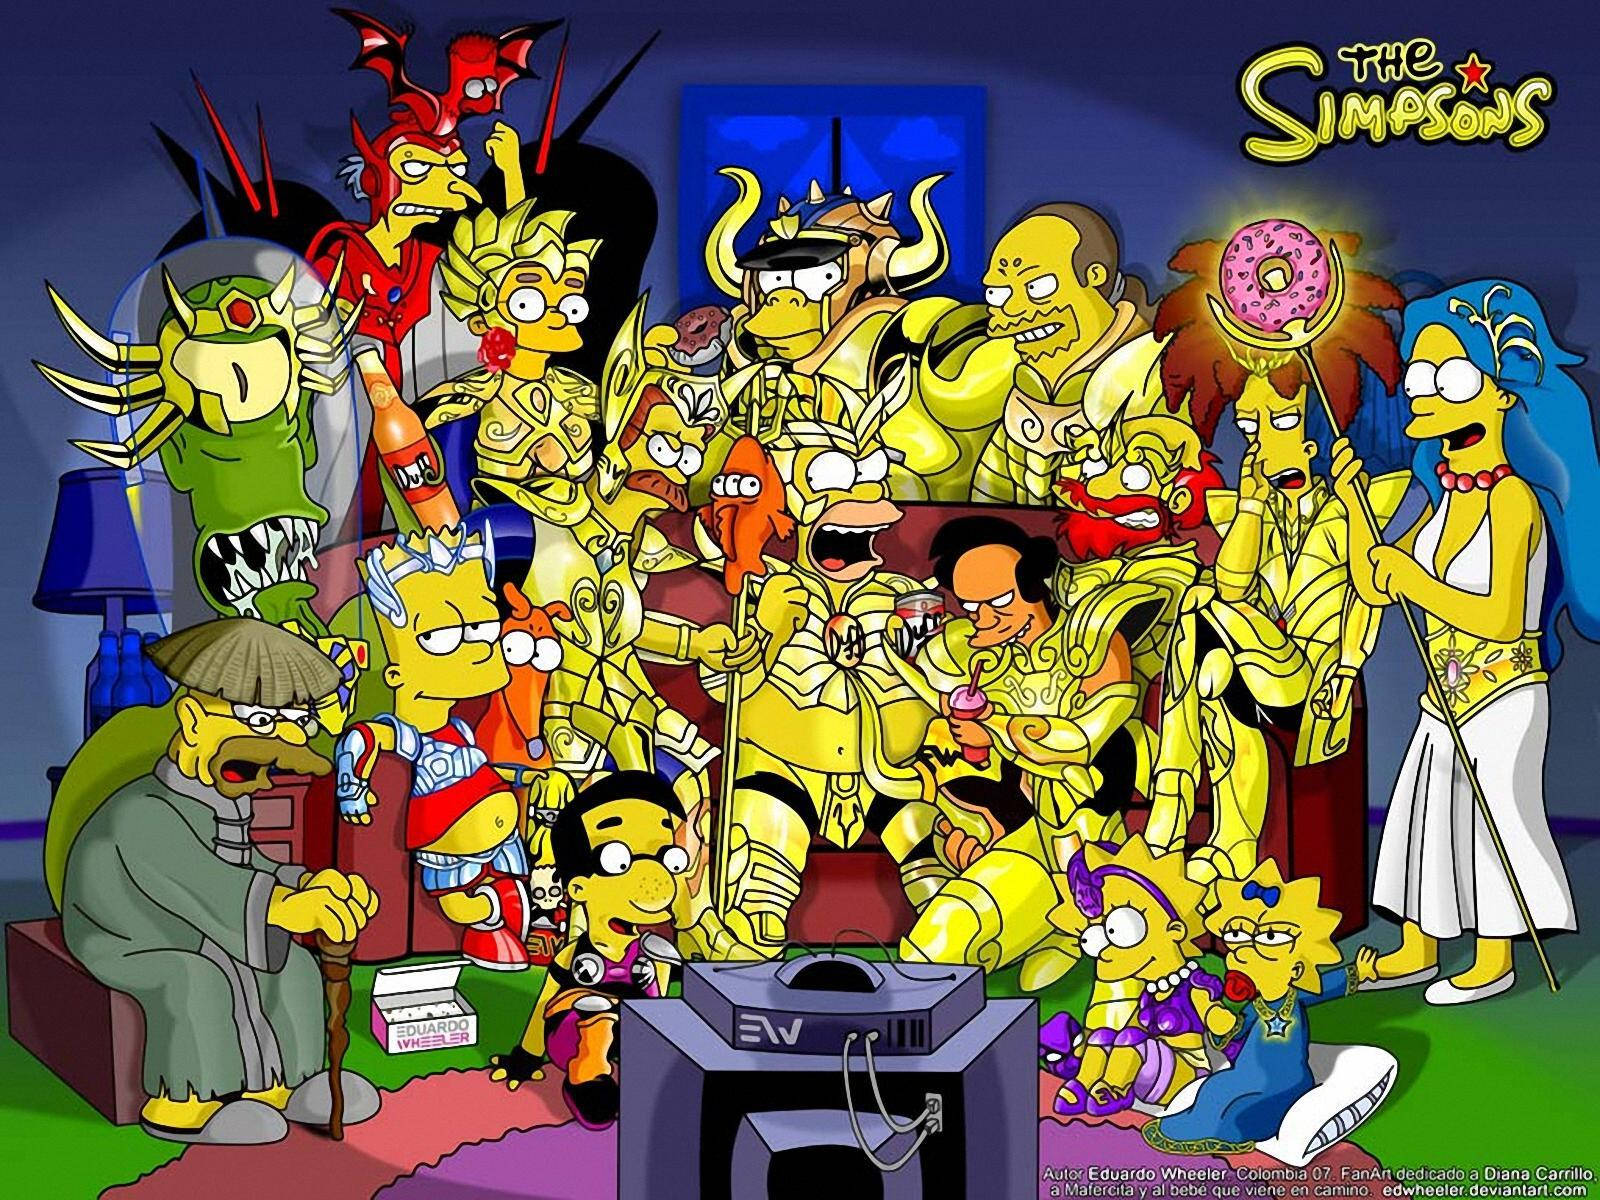 The Simpsons Halloween Specials